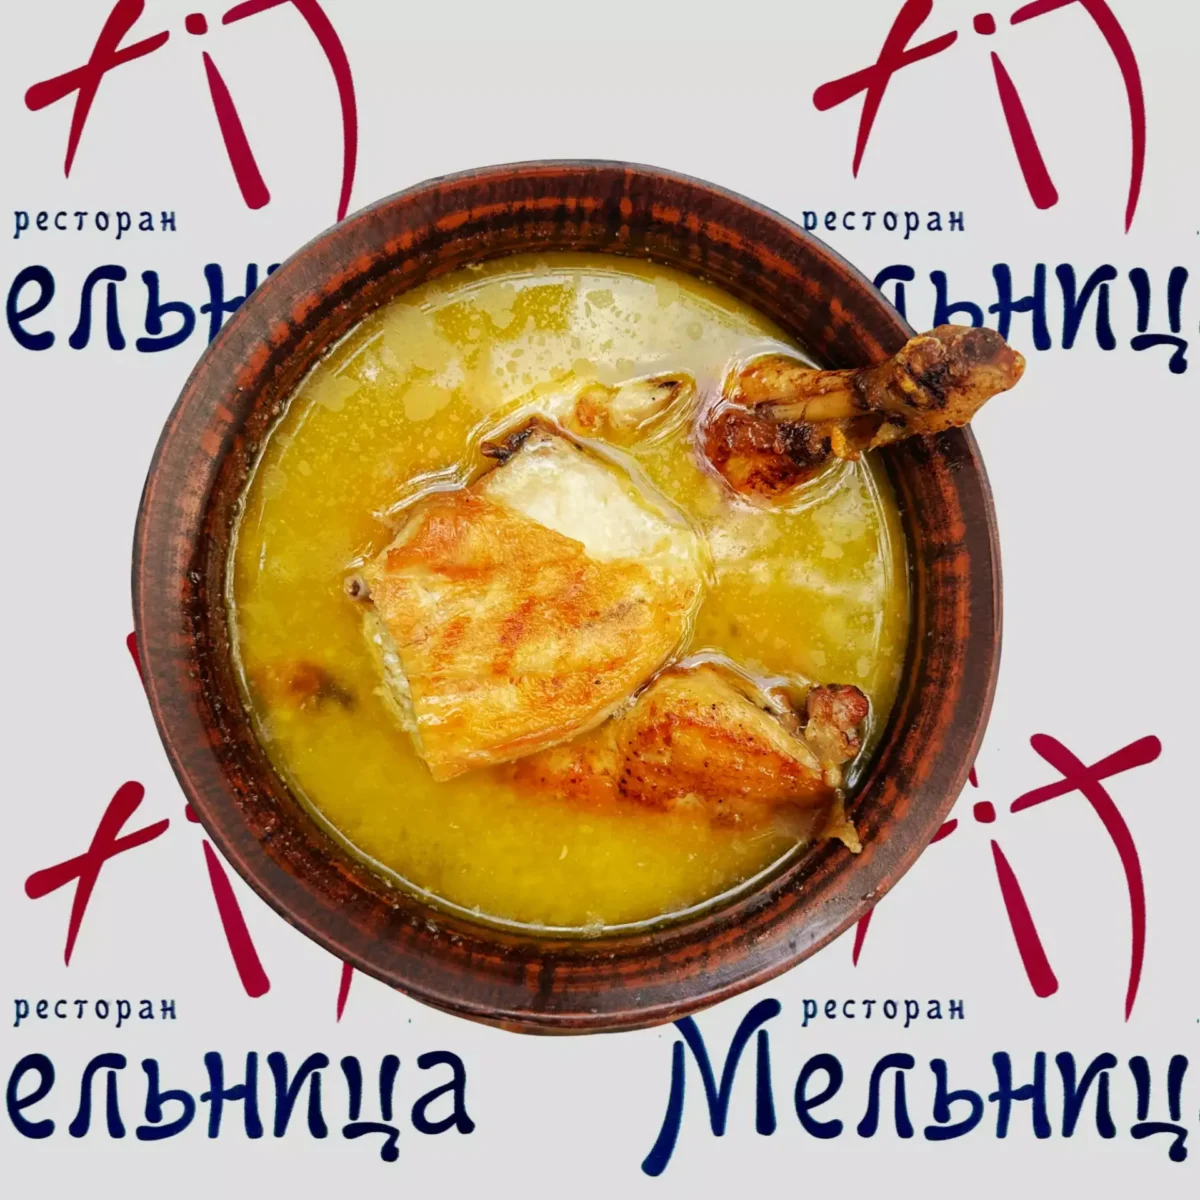 Chkmeruli chicken • "Melnitsa" restaurant, Kharkiv